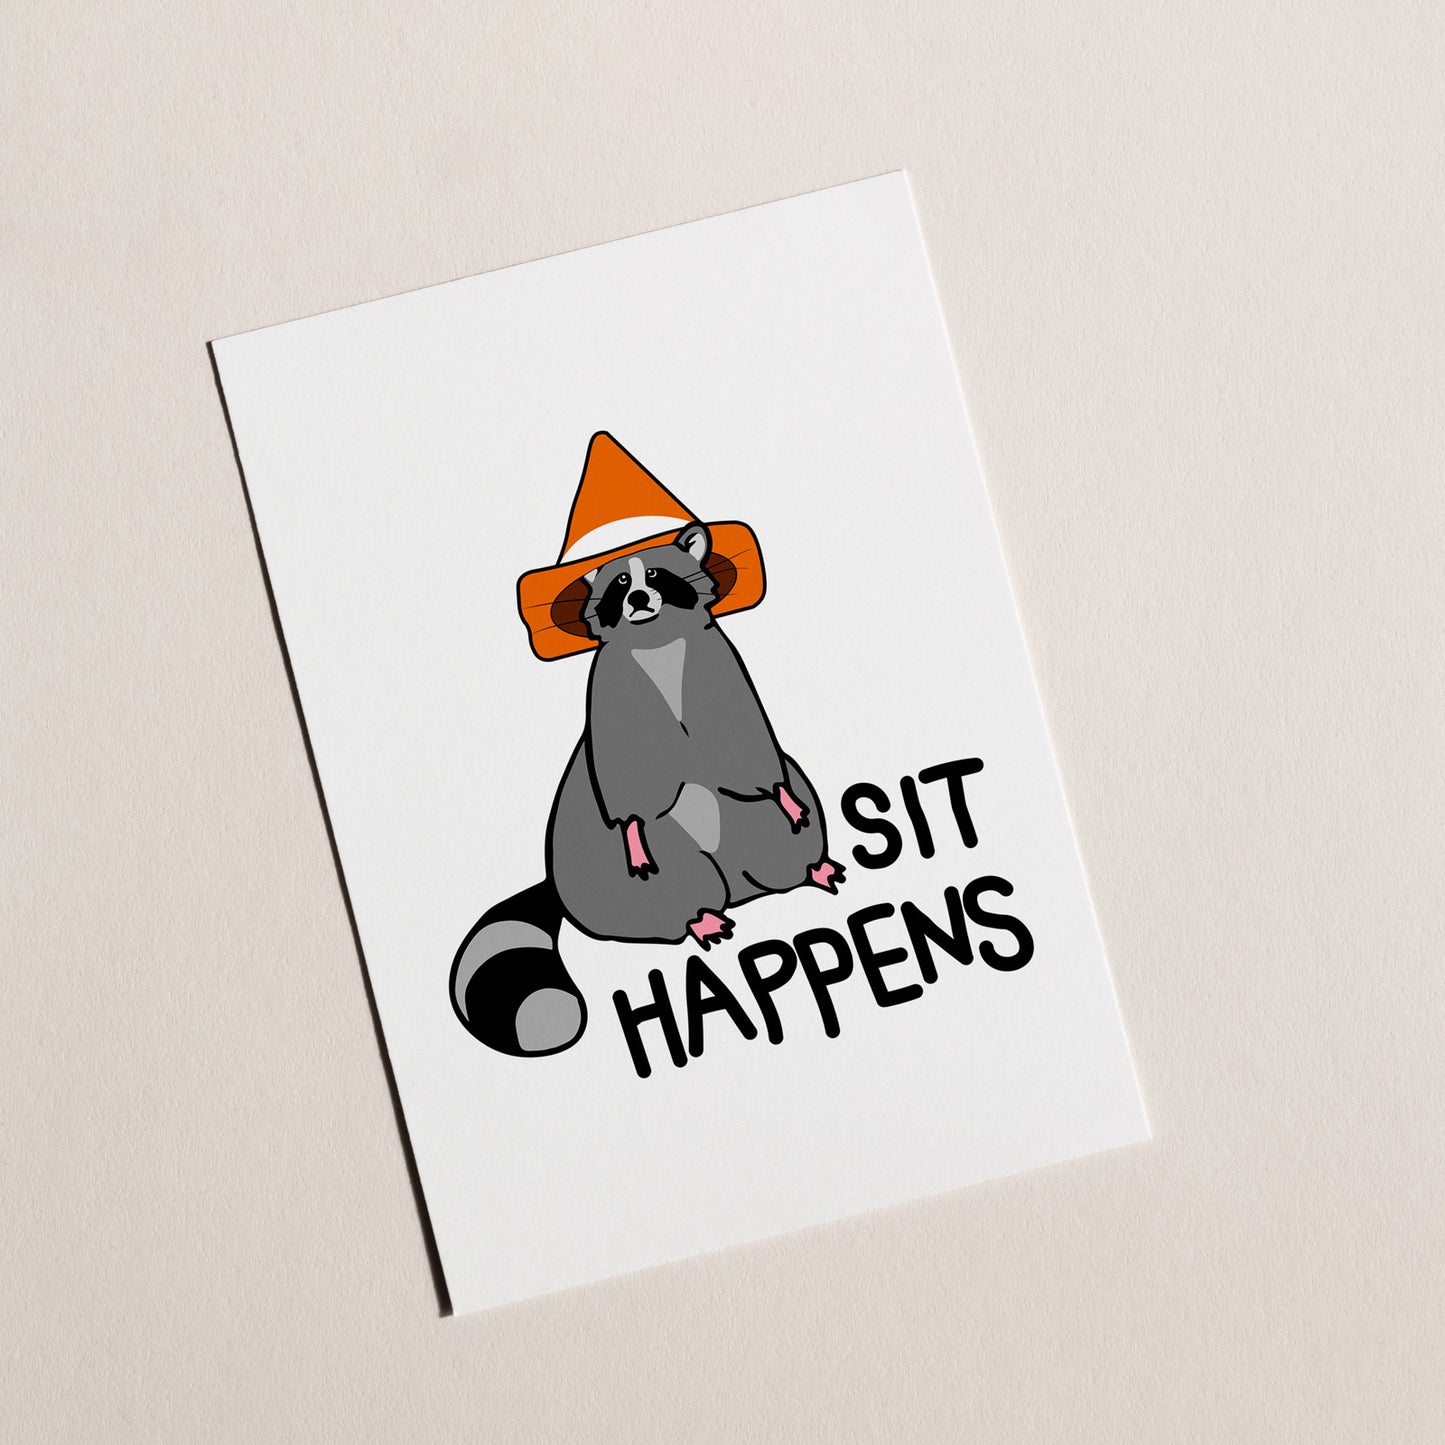 Sit Happens - Print